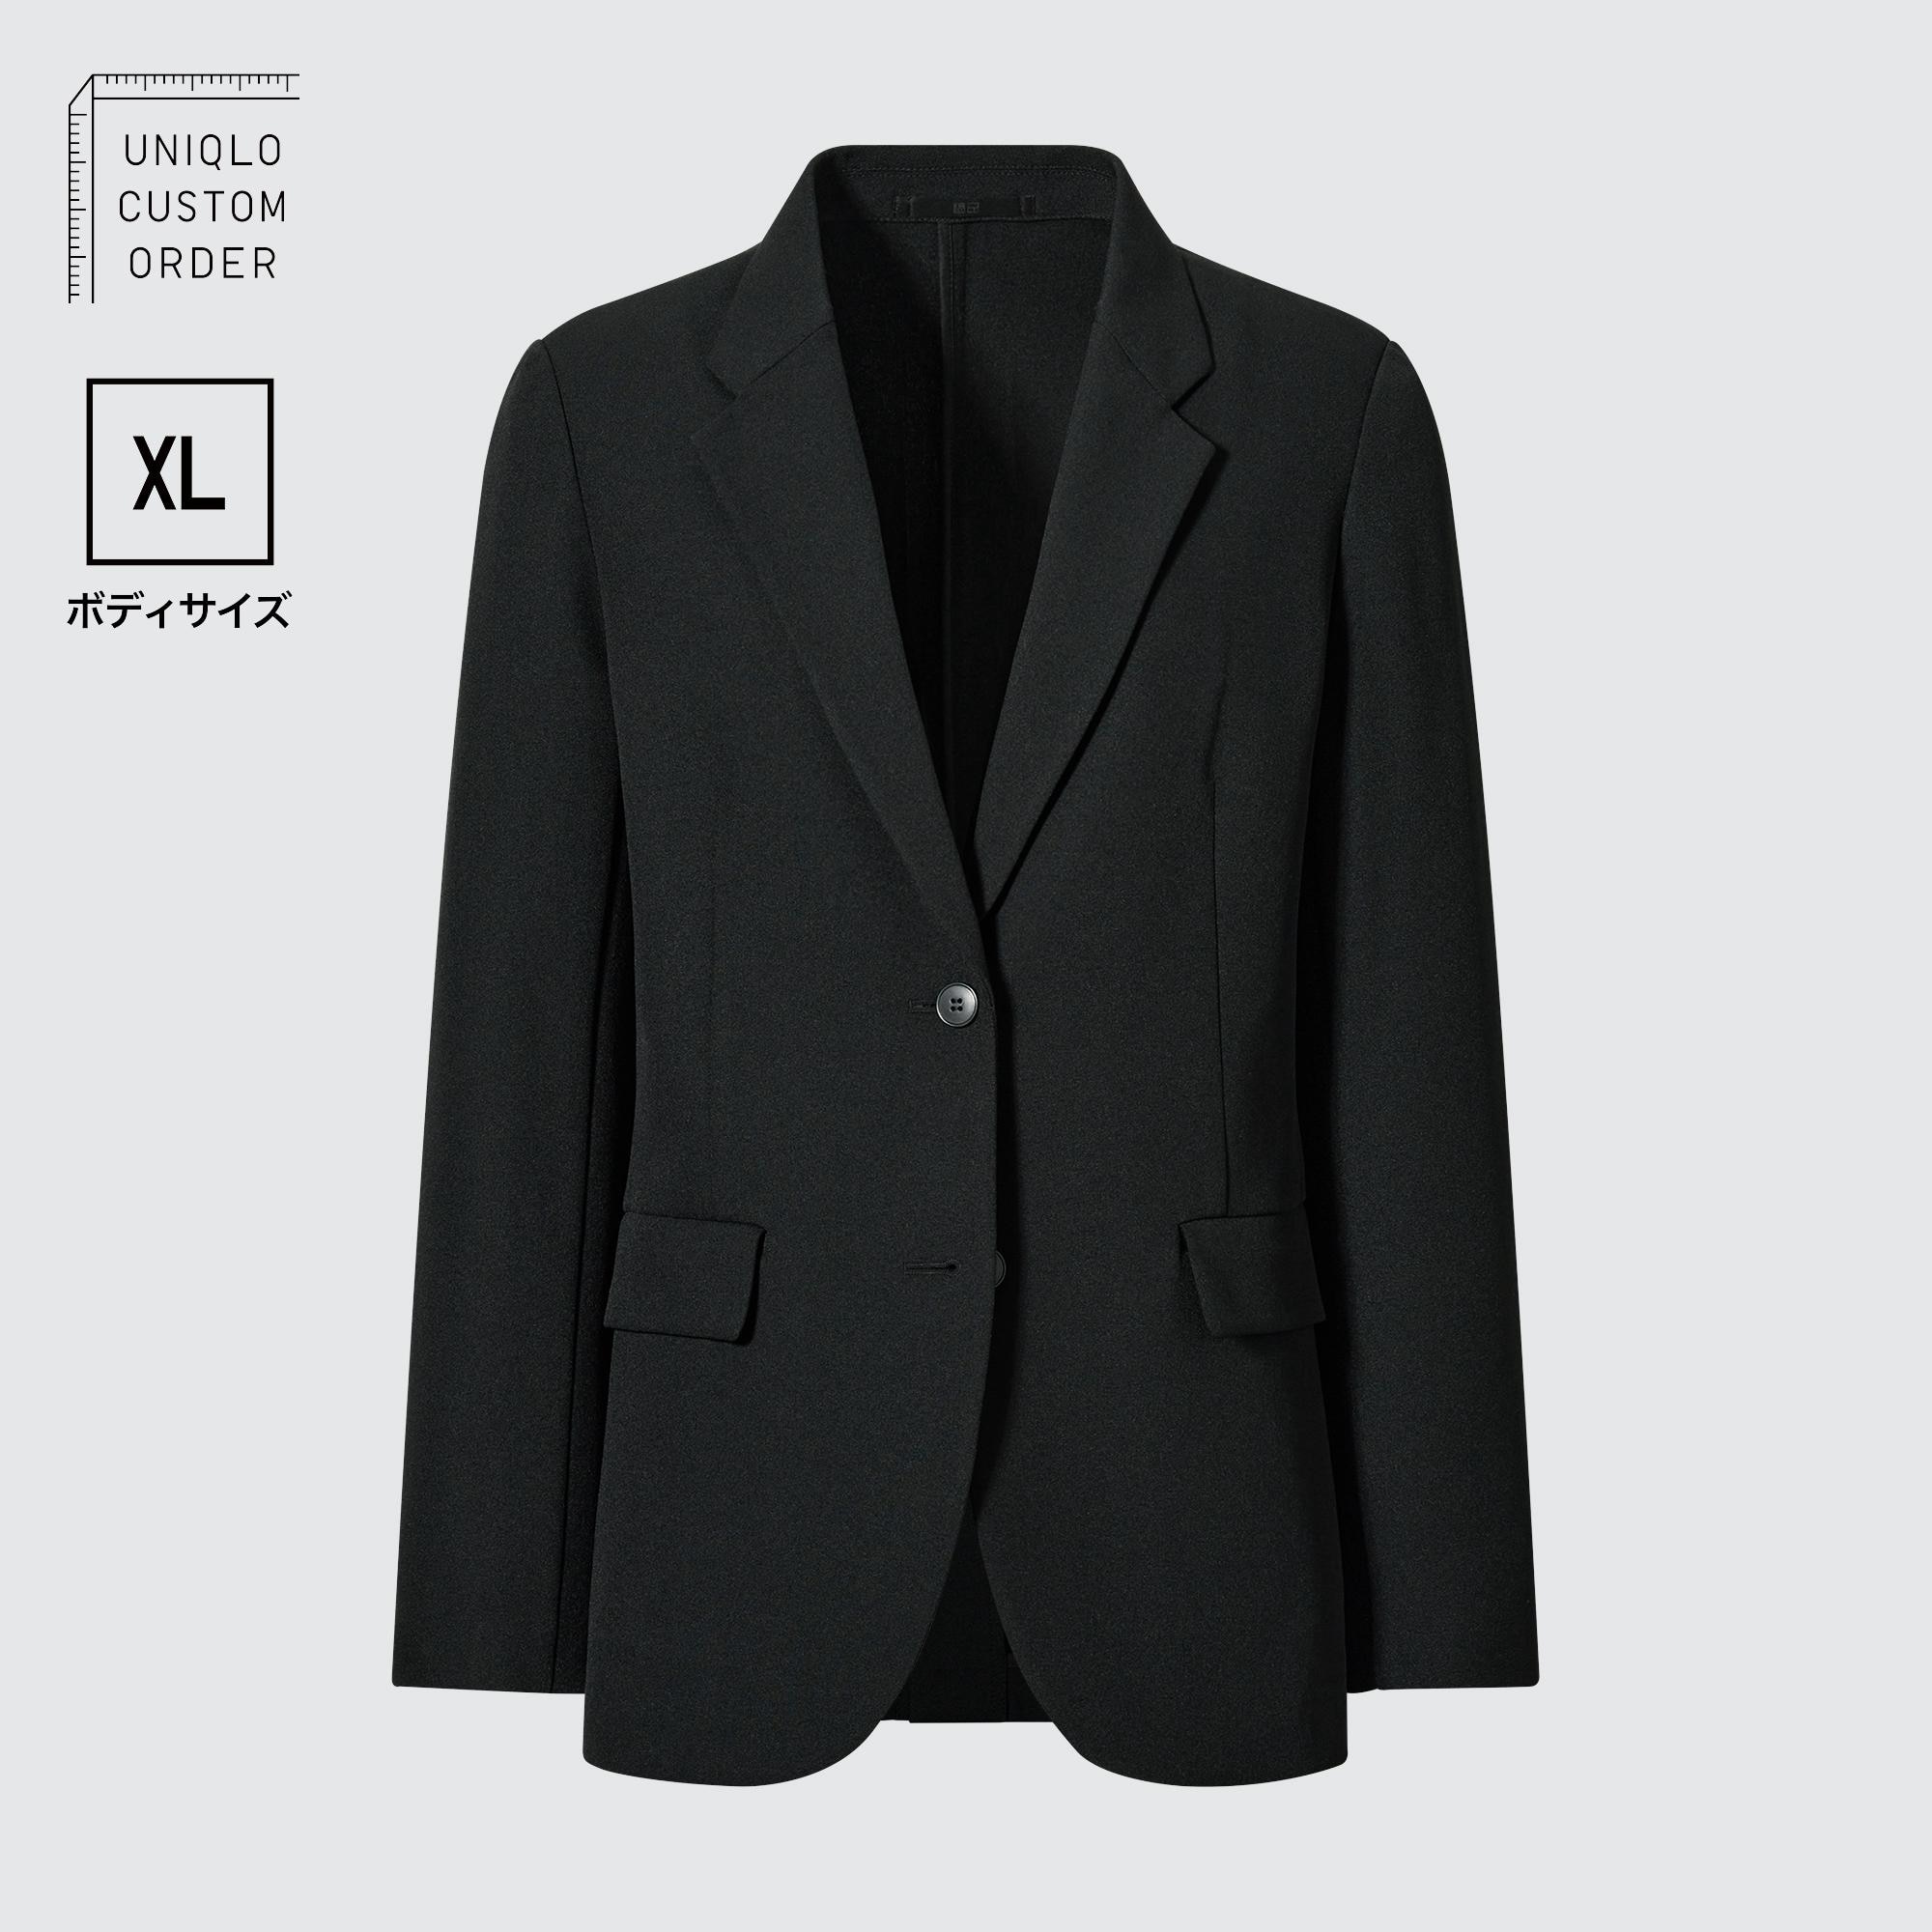 Куртка UNIQLO Кандо XL, черный цена и фото